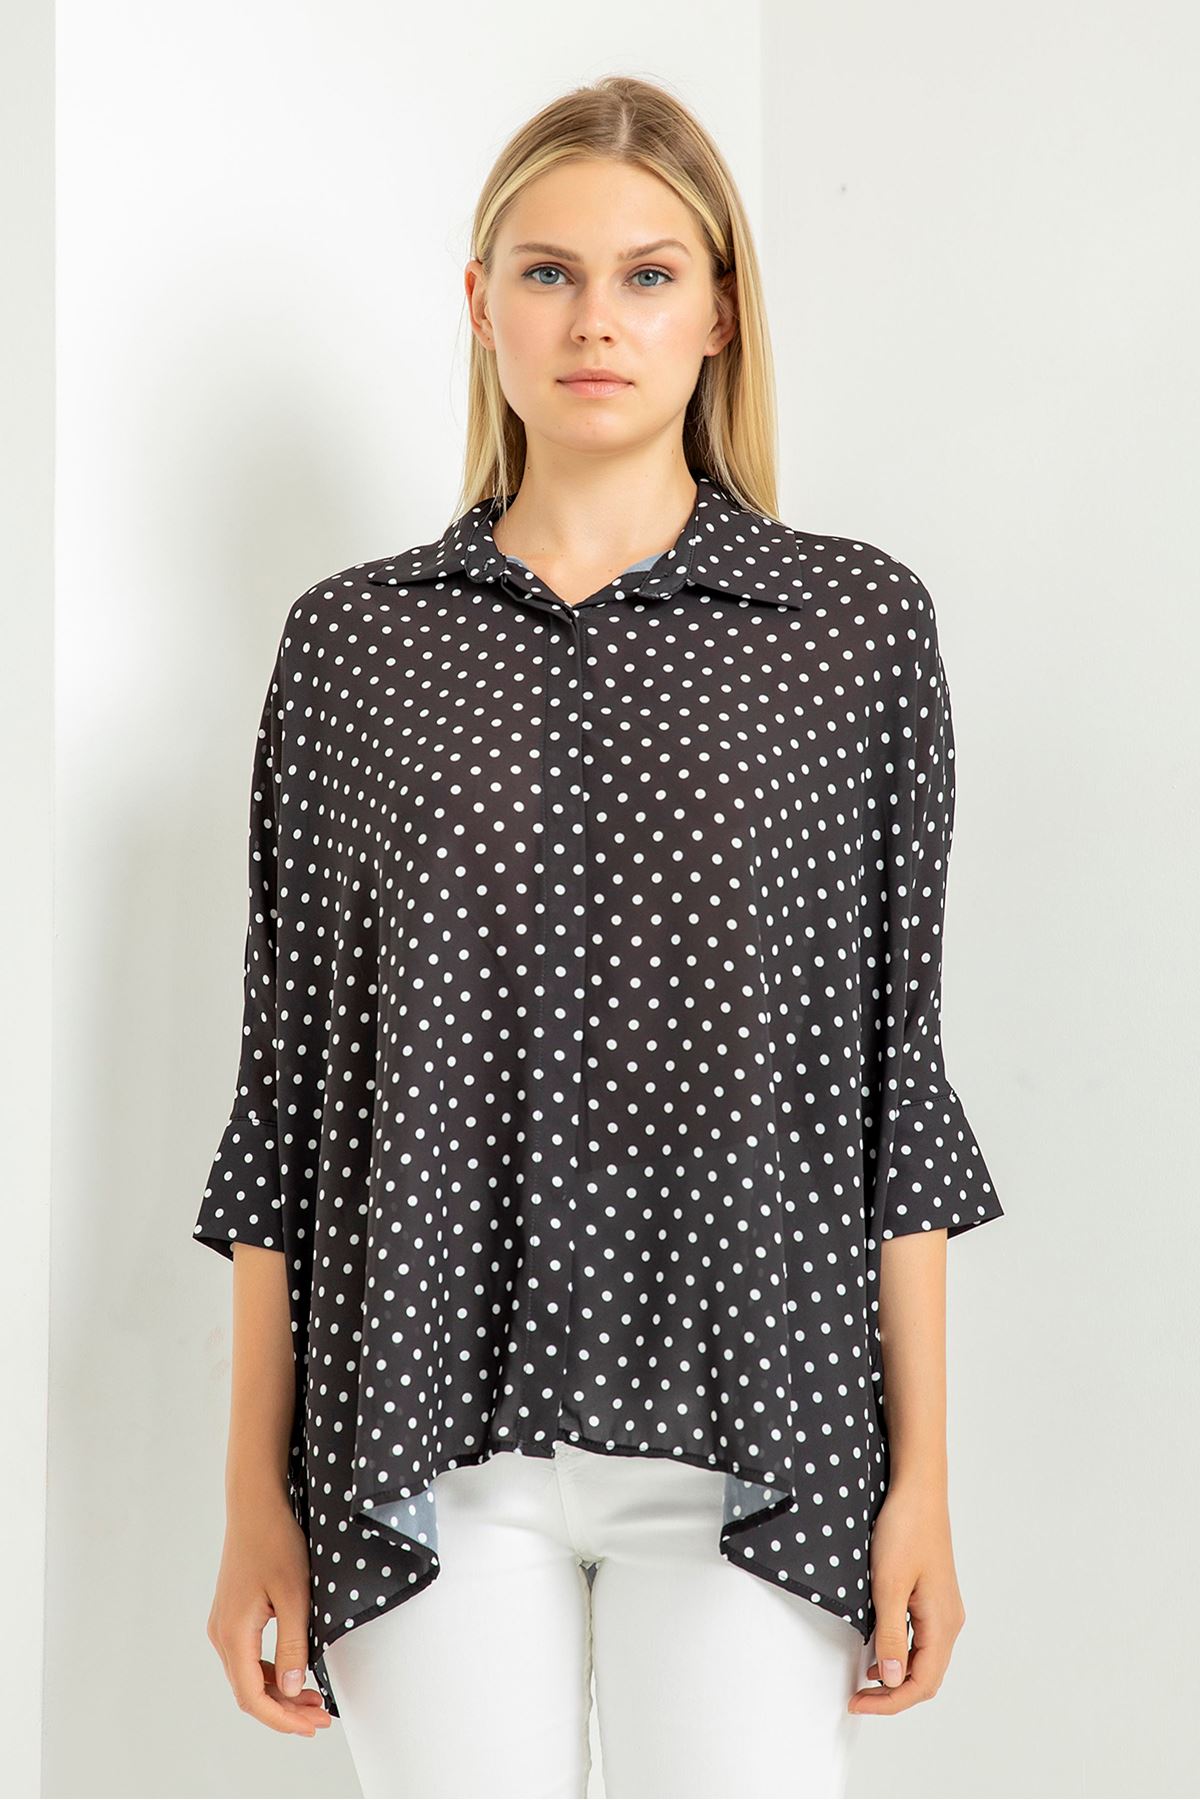 Jesica Fabric Wide Below Hip Oversize Polka-Dot Print Women'S Shirt - Black